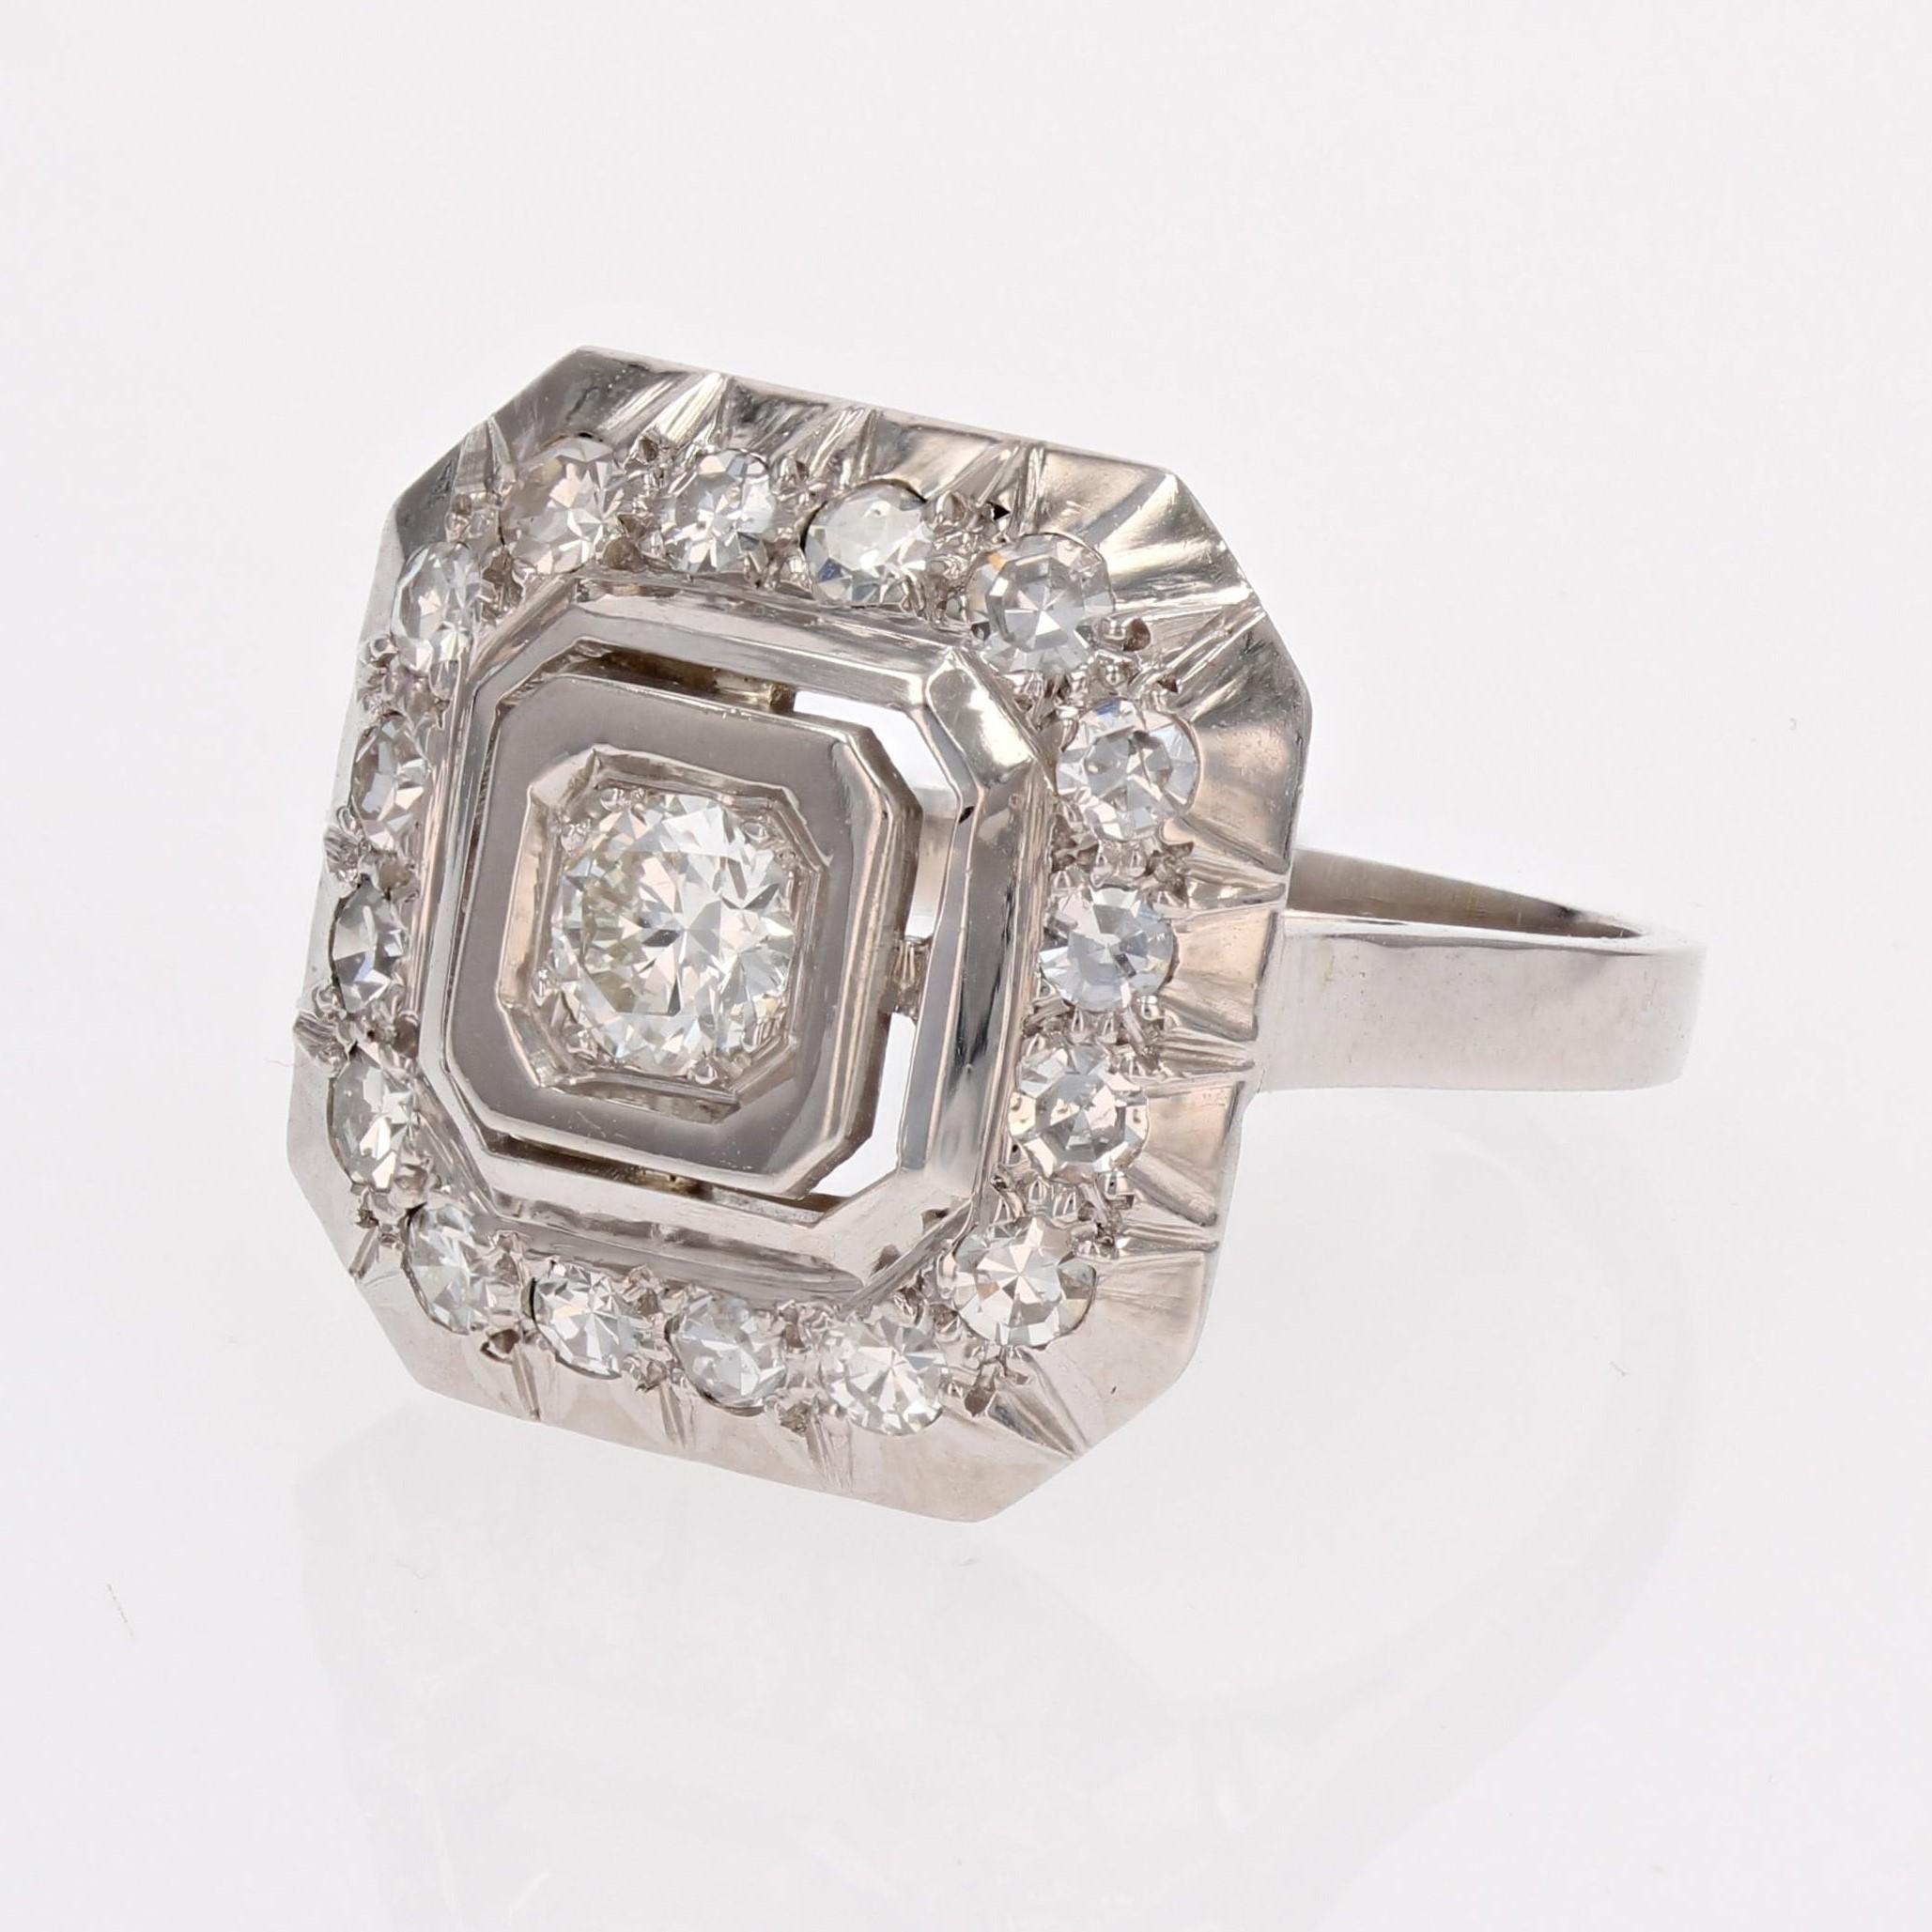 1930s Art Deco 18 Karat White Gold Diamond Squarred Ring For Sale 3